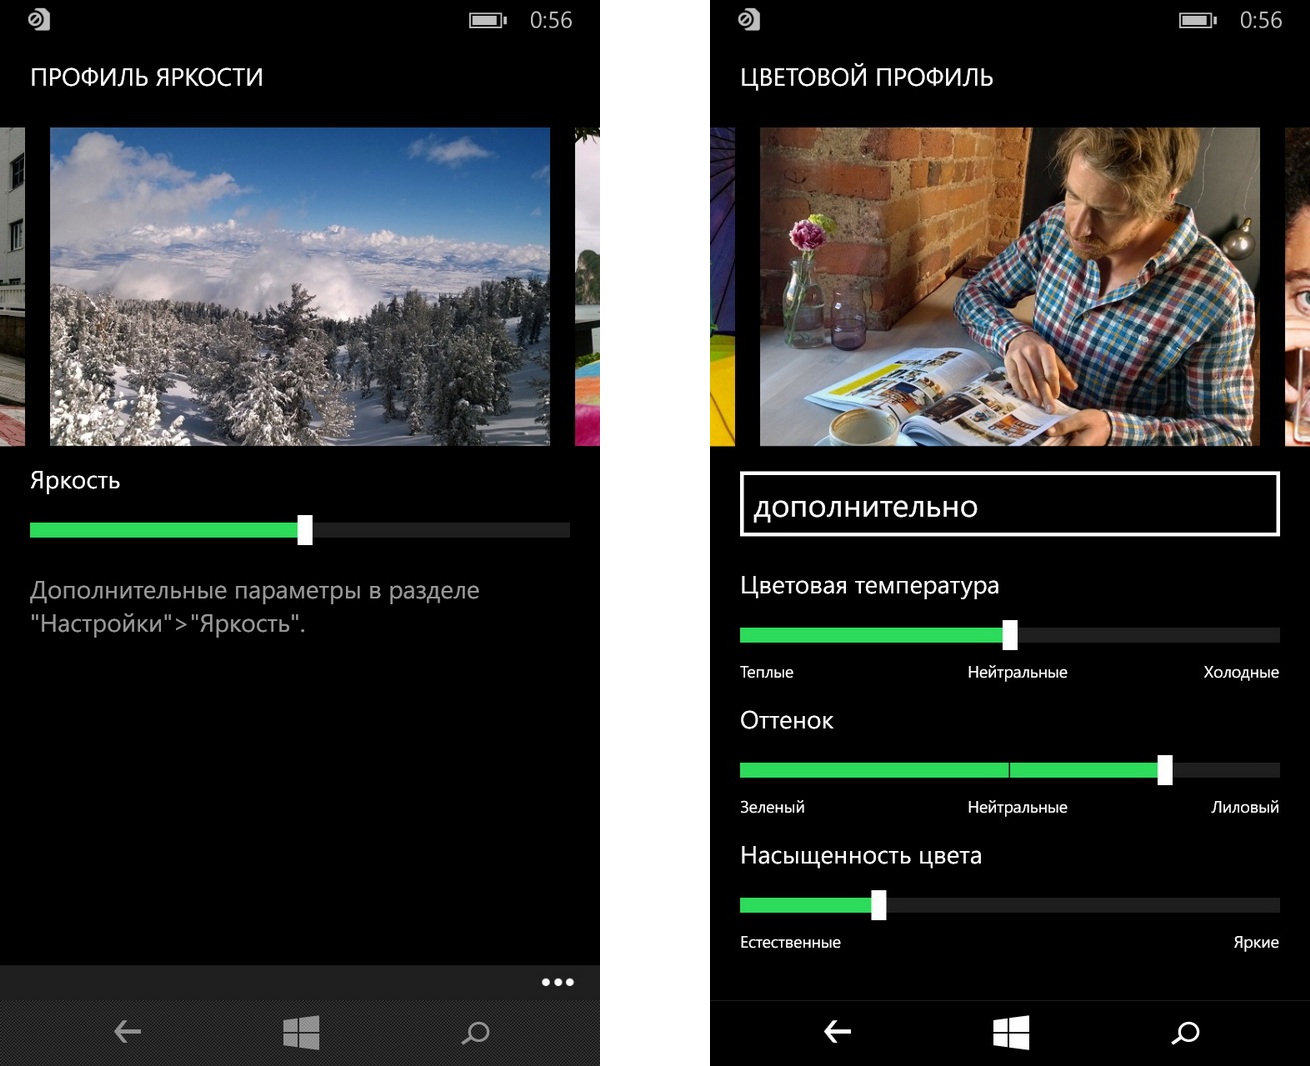 Nokia Lumia 730 - скриншот настройки экрана